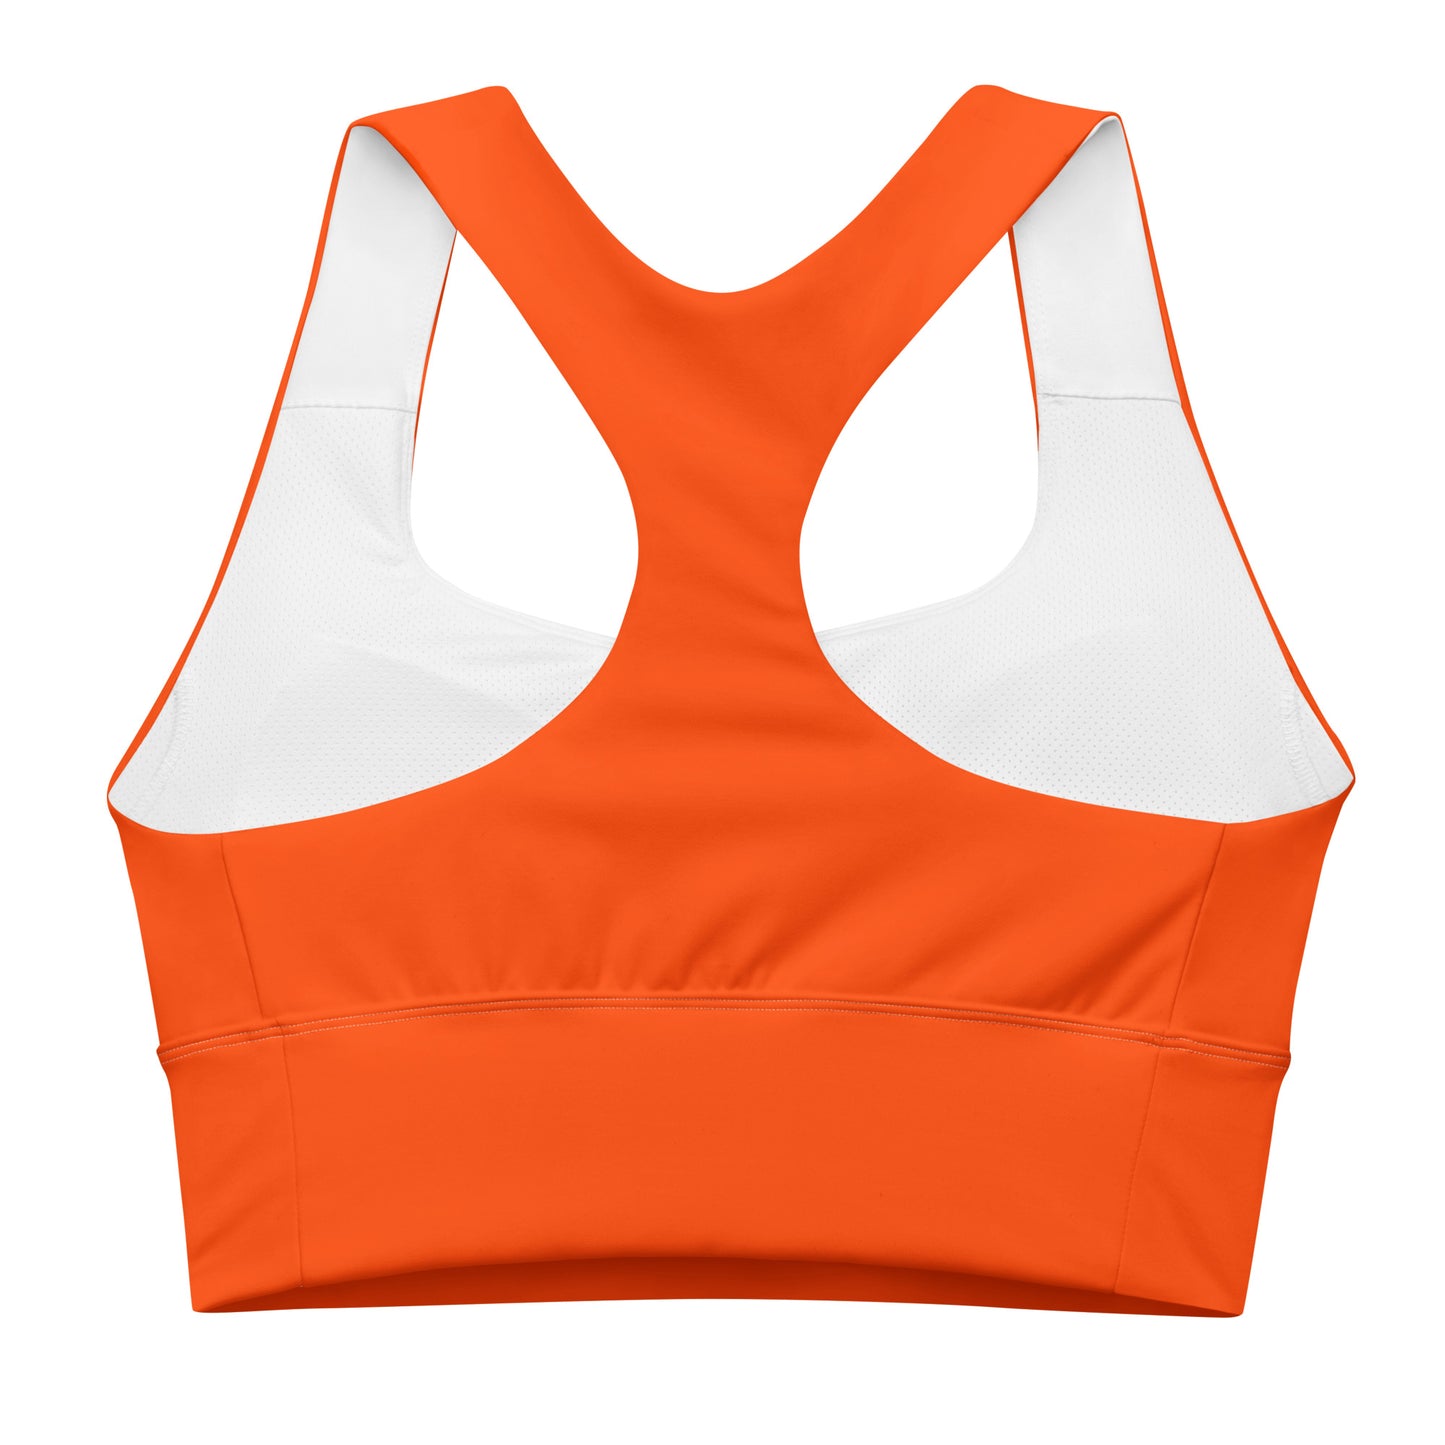 The Gymbum UK Orange QuickDry sports bra